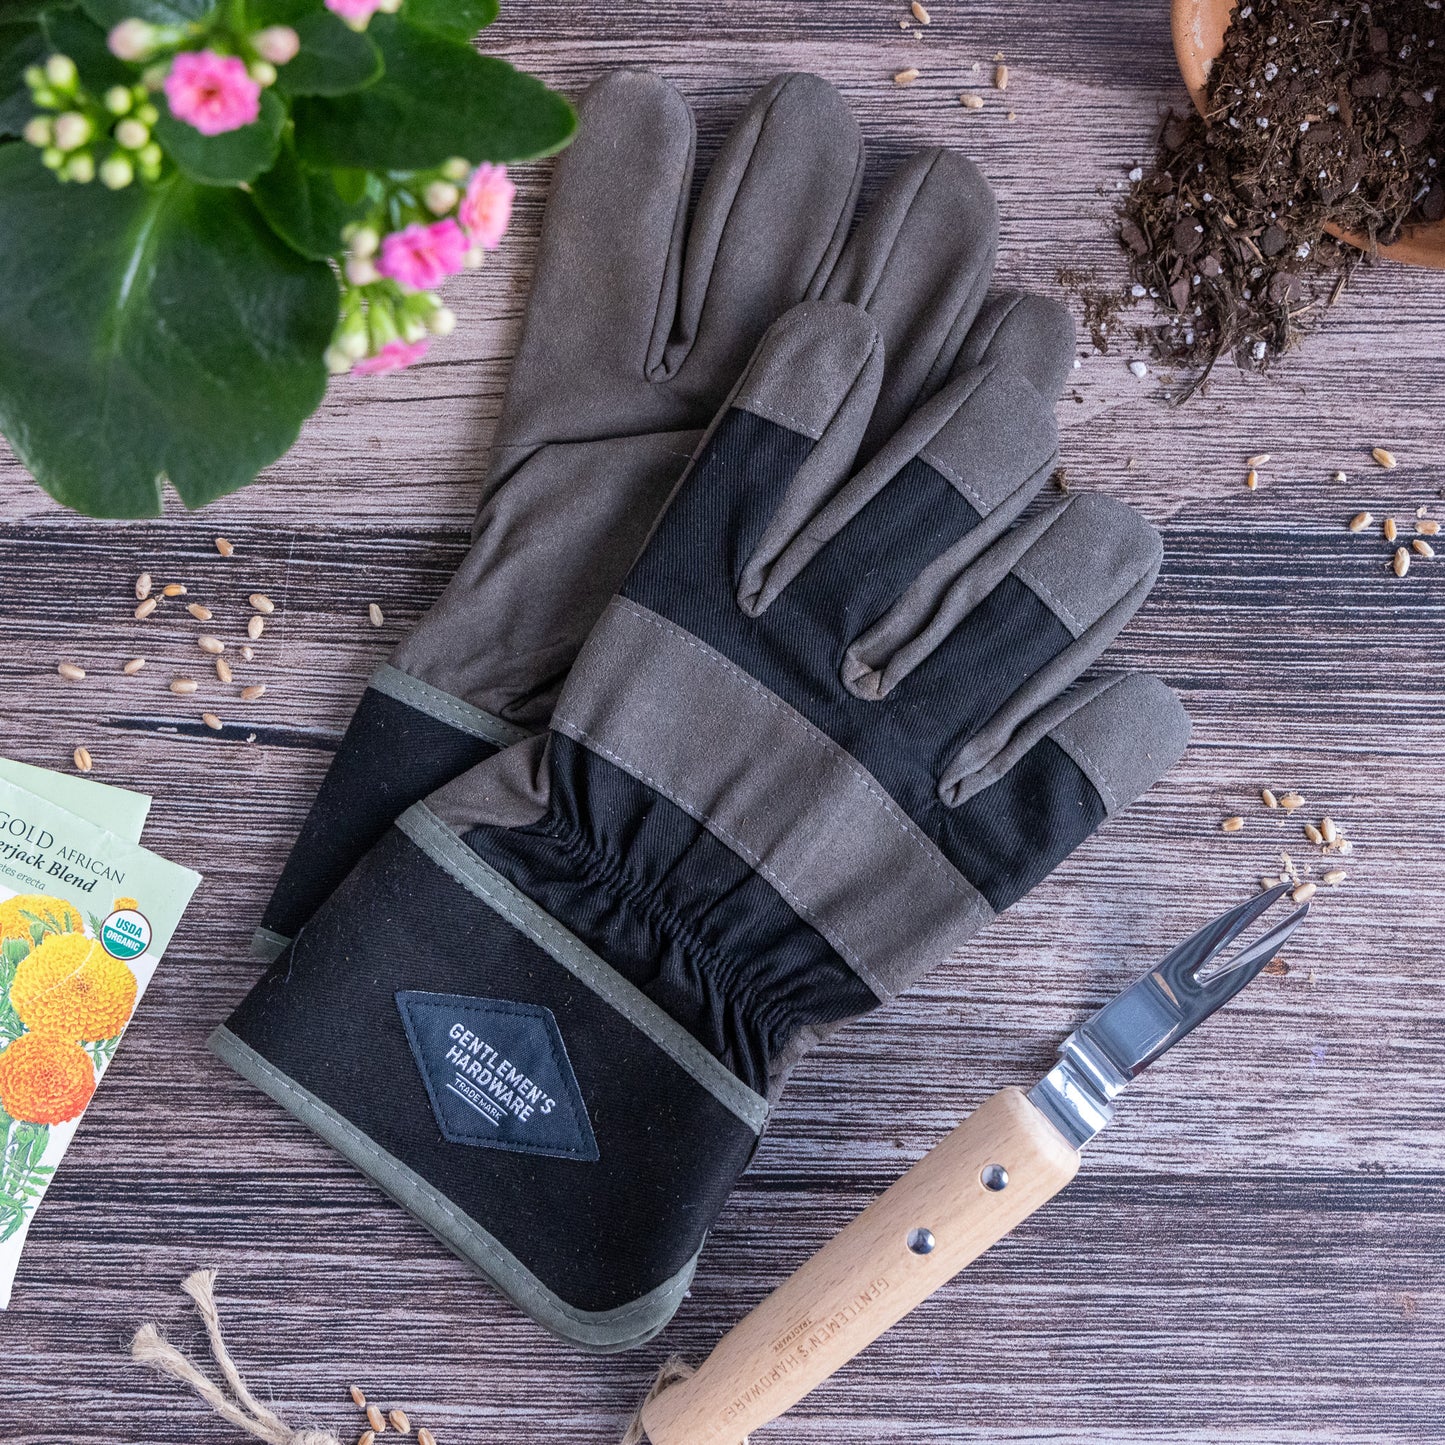 Gardening Gloves & Root Lifter